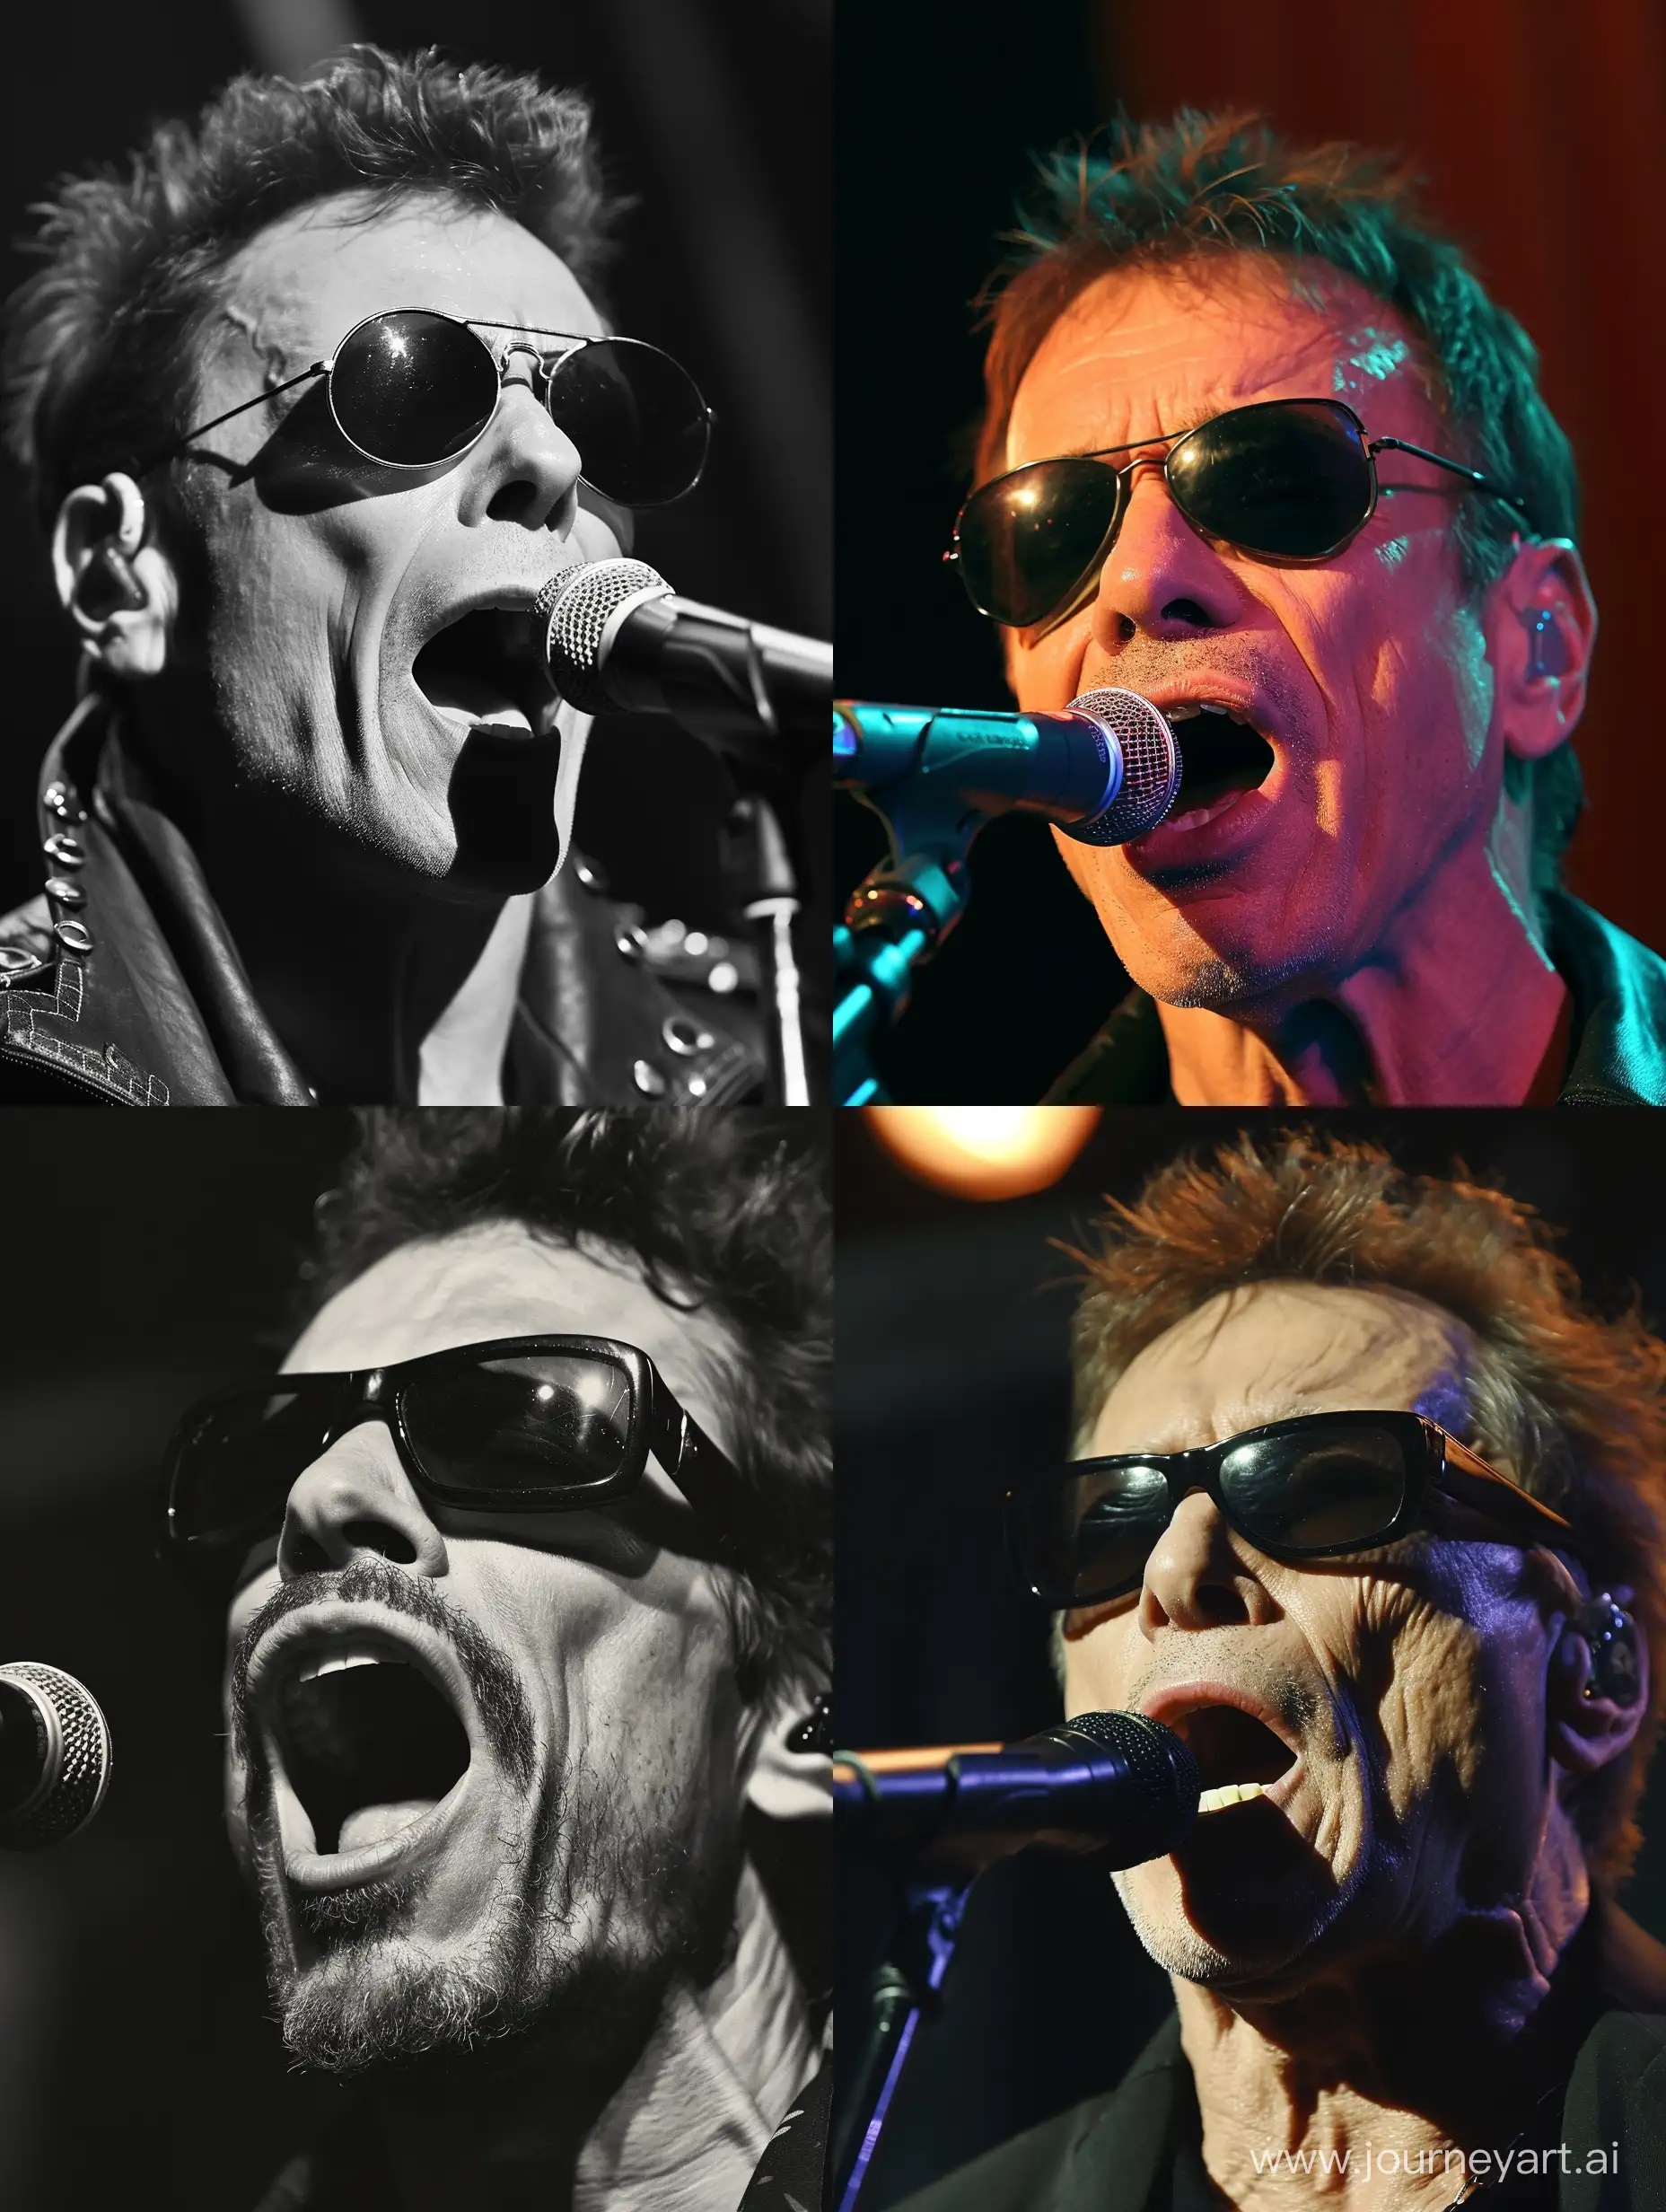 Tony-Stark-Singing-Songs-in-Stylish-Sunglasses